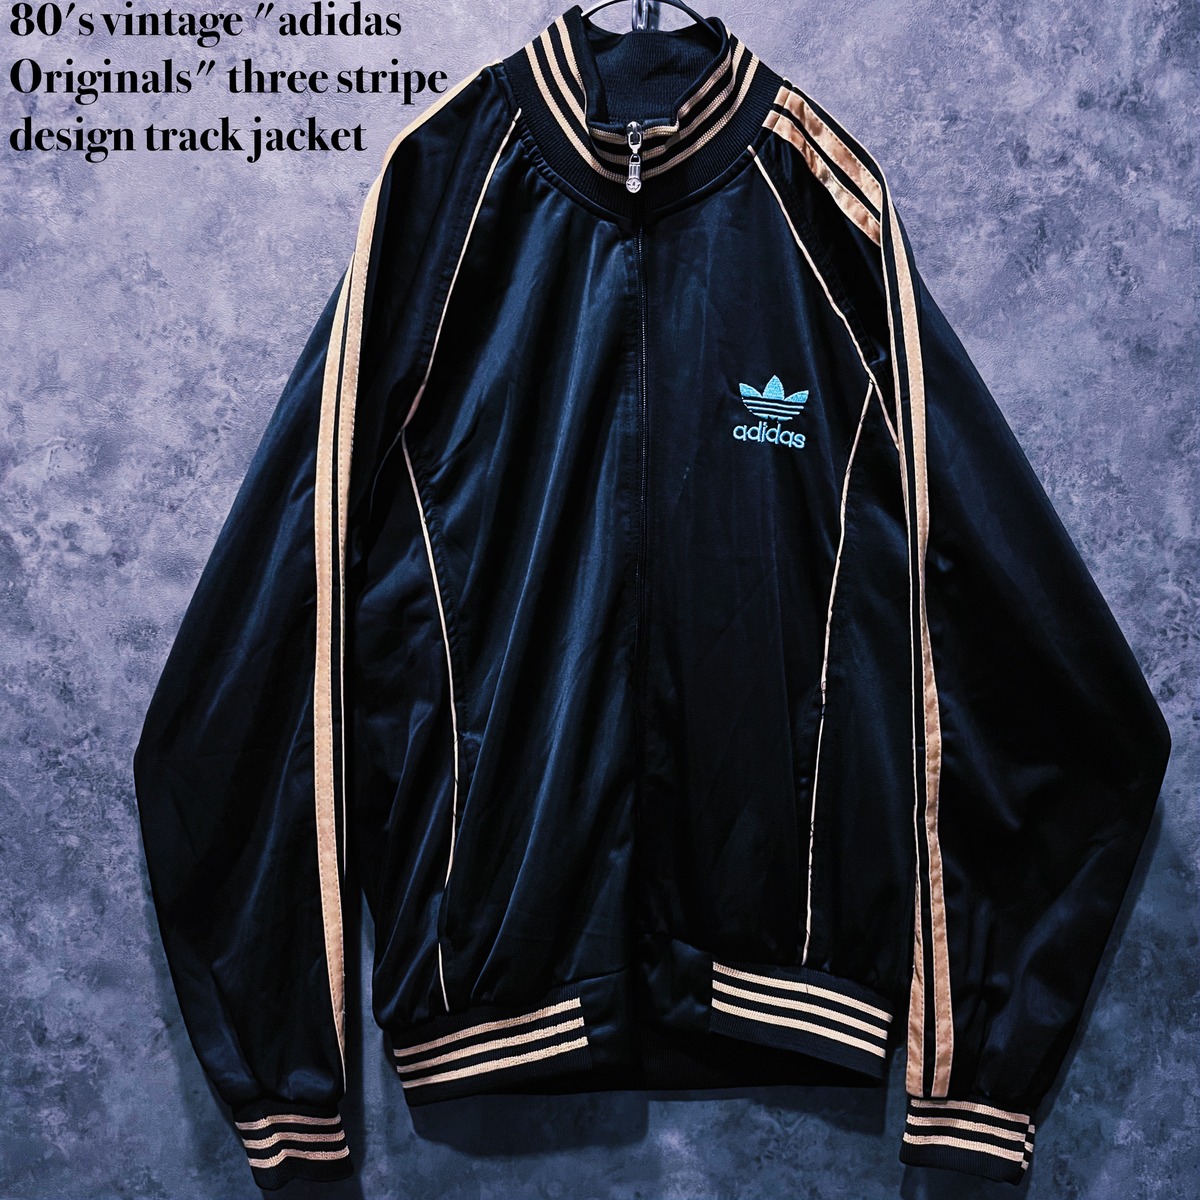 doppio】80's vintage "adidas Originals" stripe design track jacket |